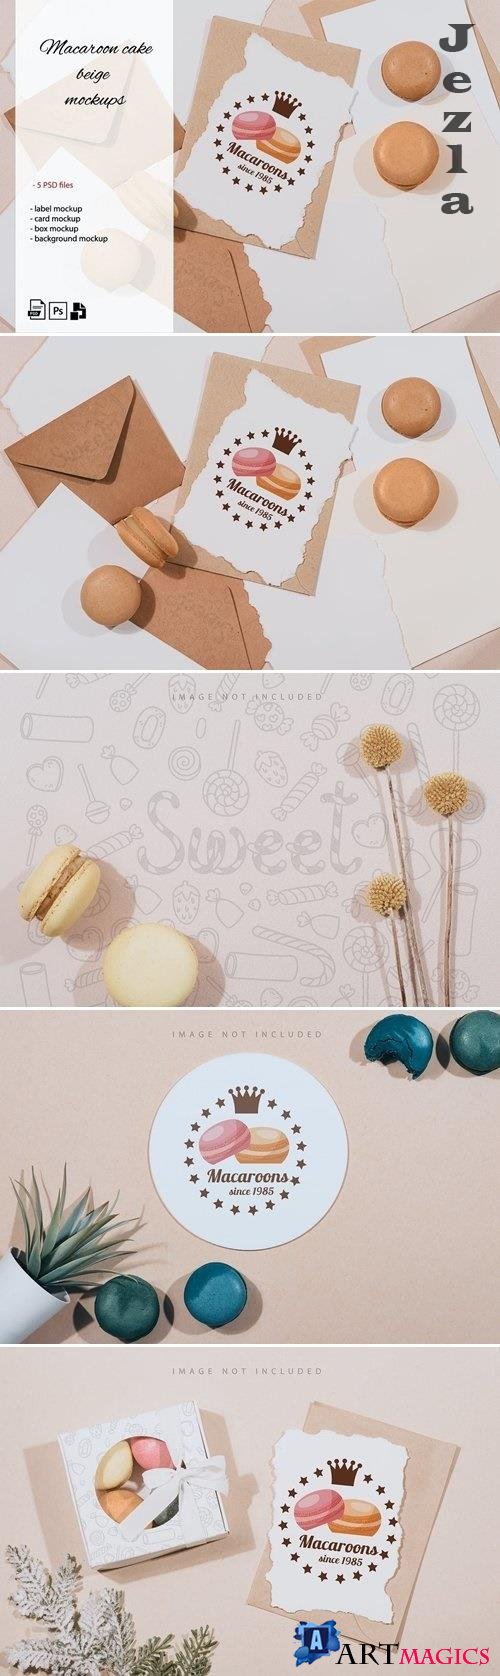 French Macarons beige mockup - 6679646